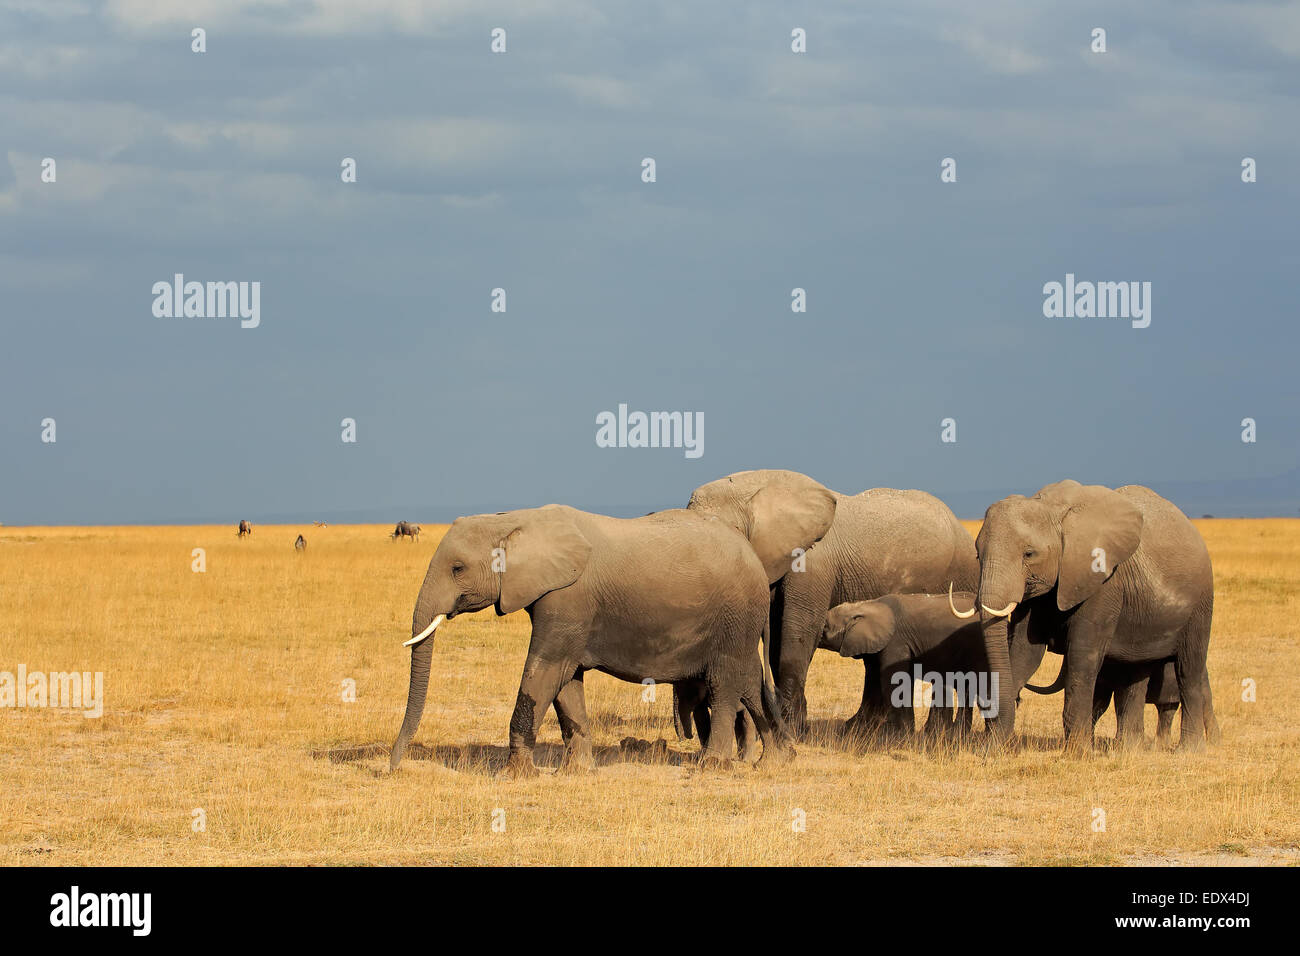 African elephants (Loxodonta africana) walking in grassland, Amboseli National Park, Kenya Stock Photo